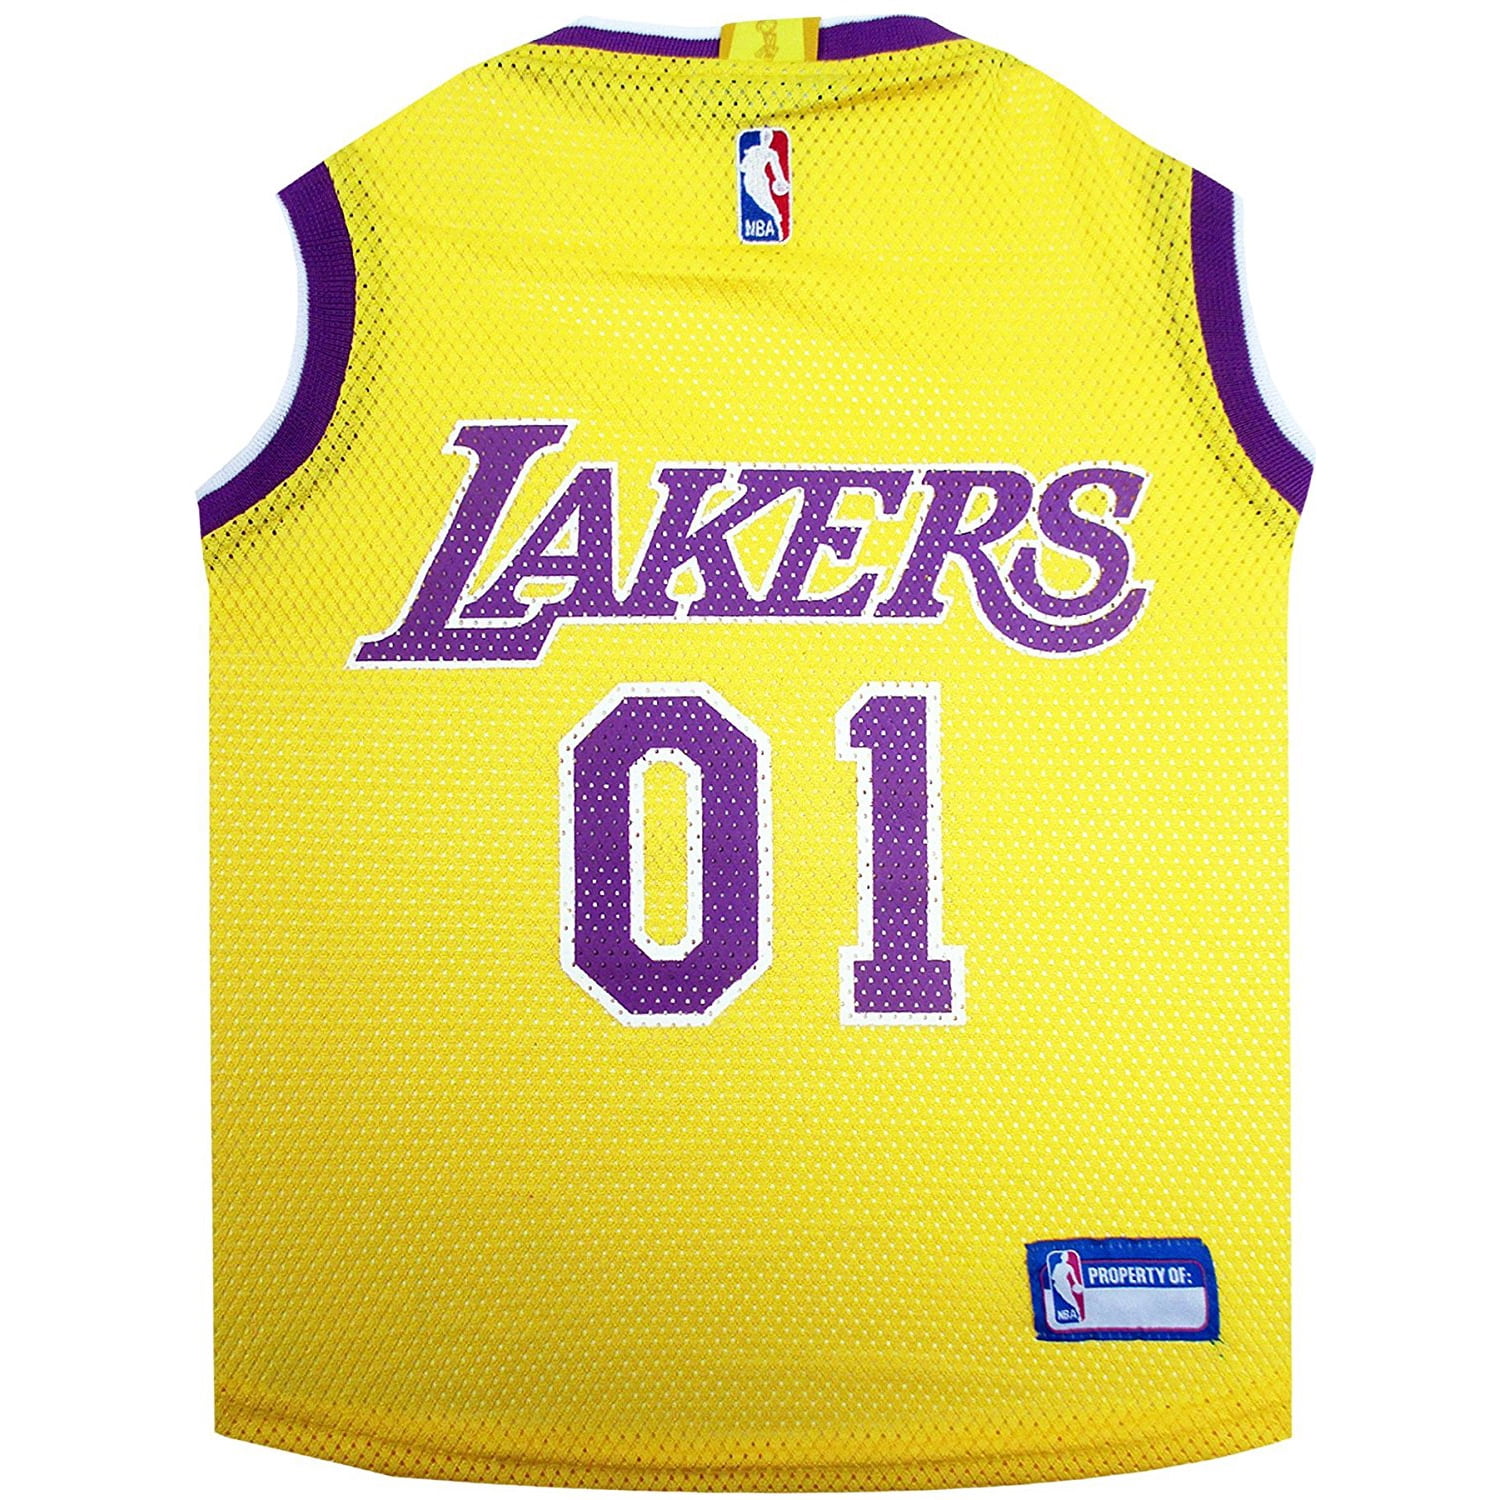 Los Angeles Lakers Apparel, Lakers Gear, LA Lakers Apparel